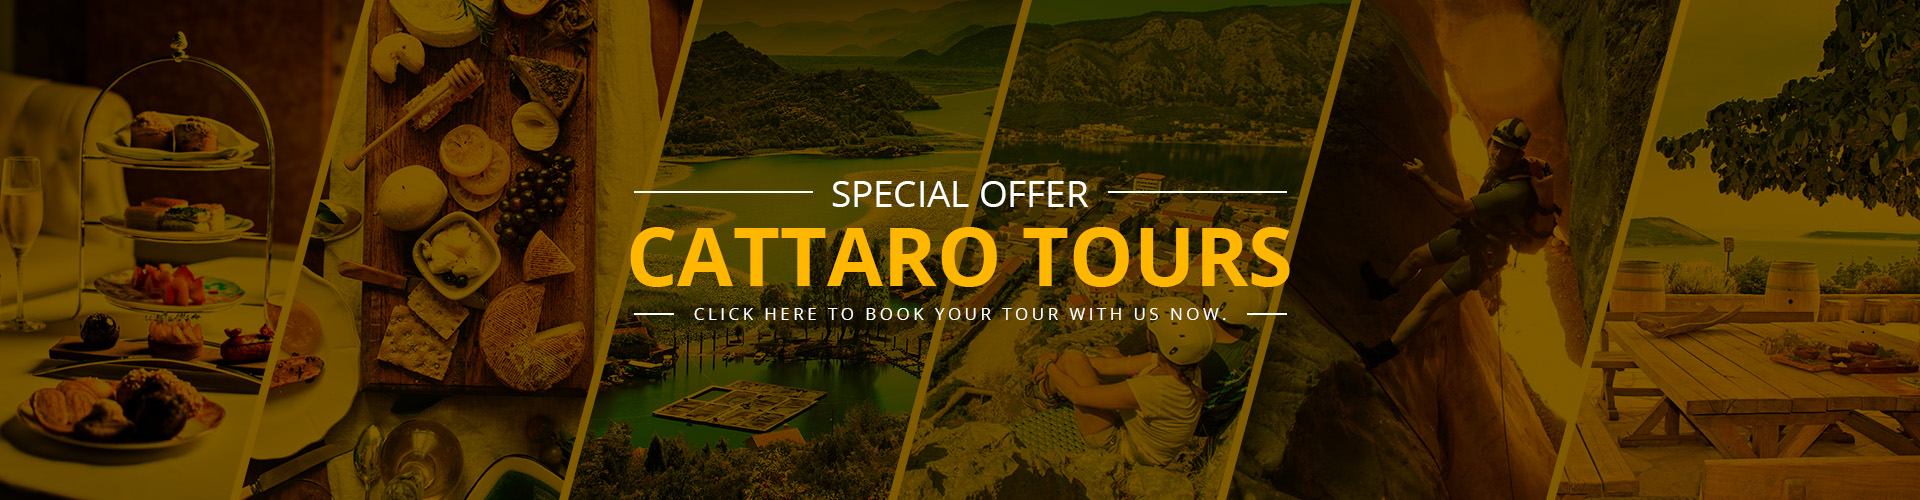 Special offer - Cattaro tours